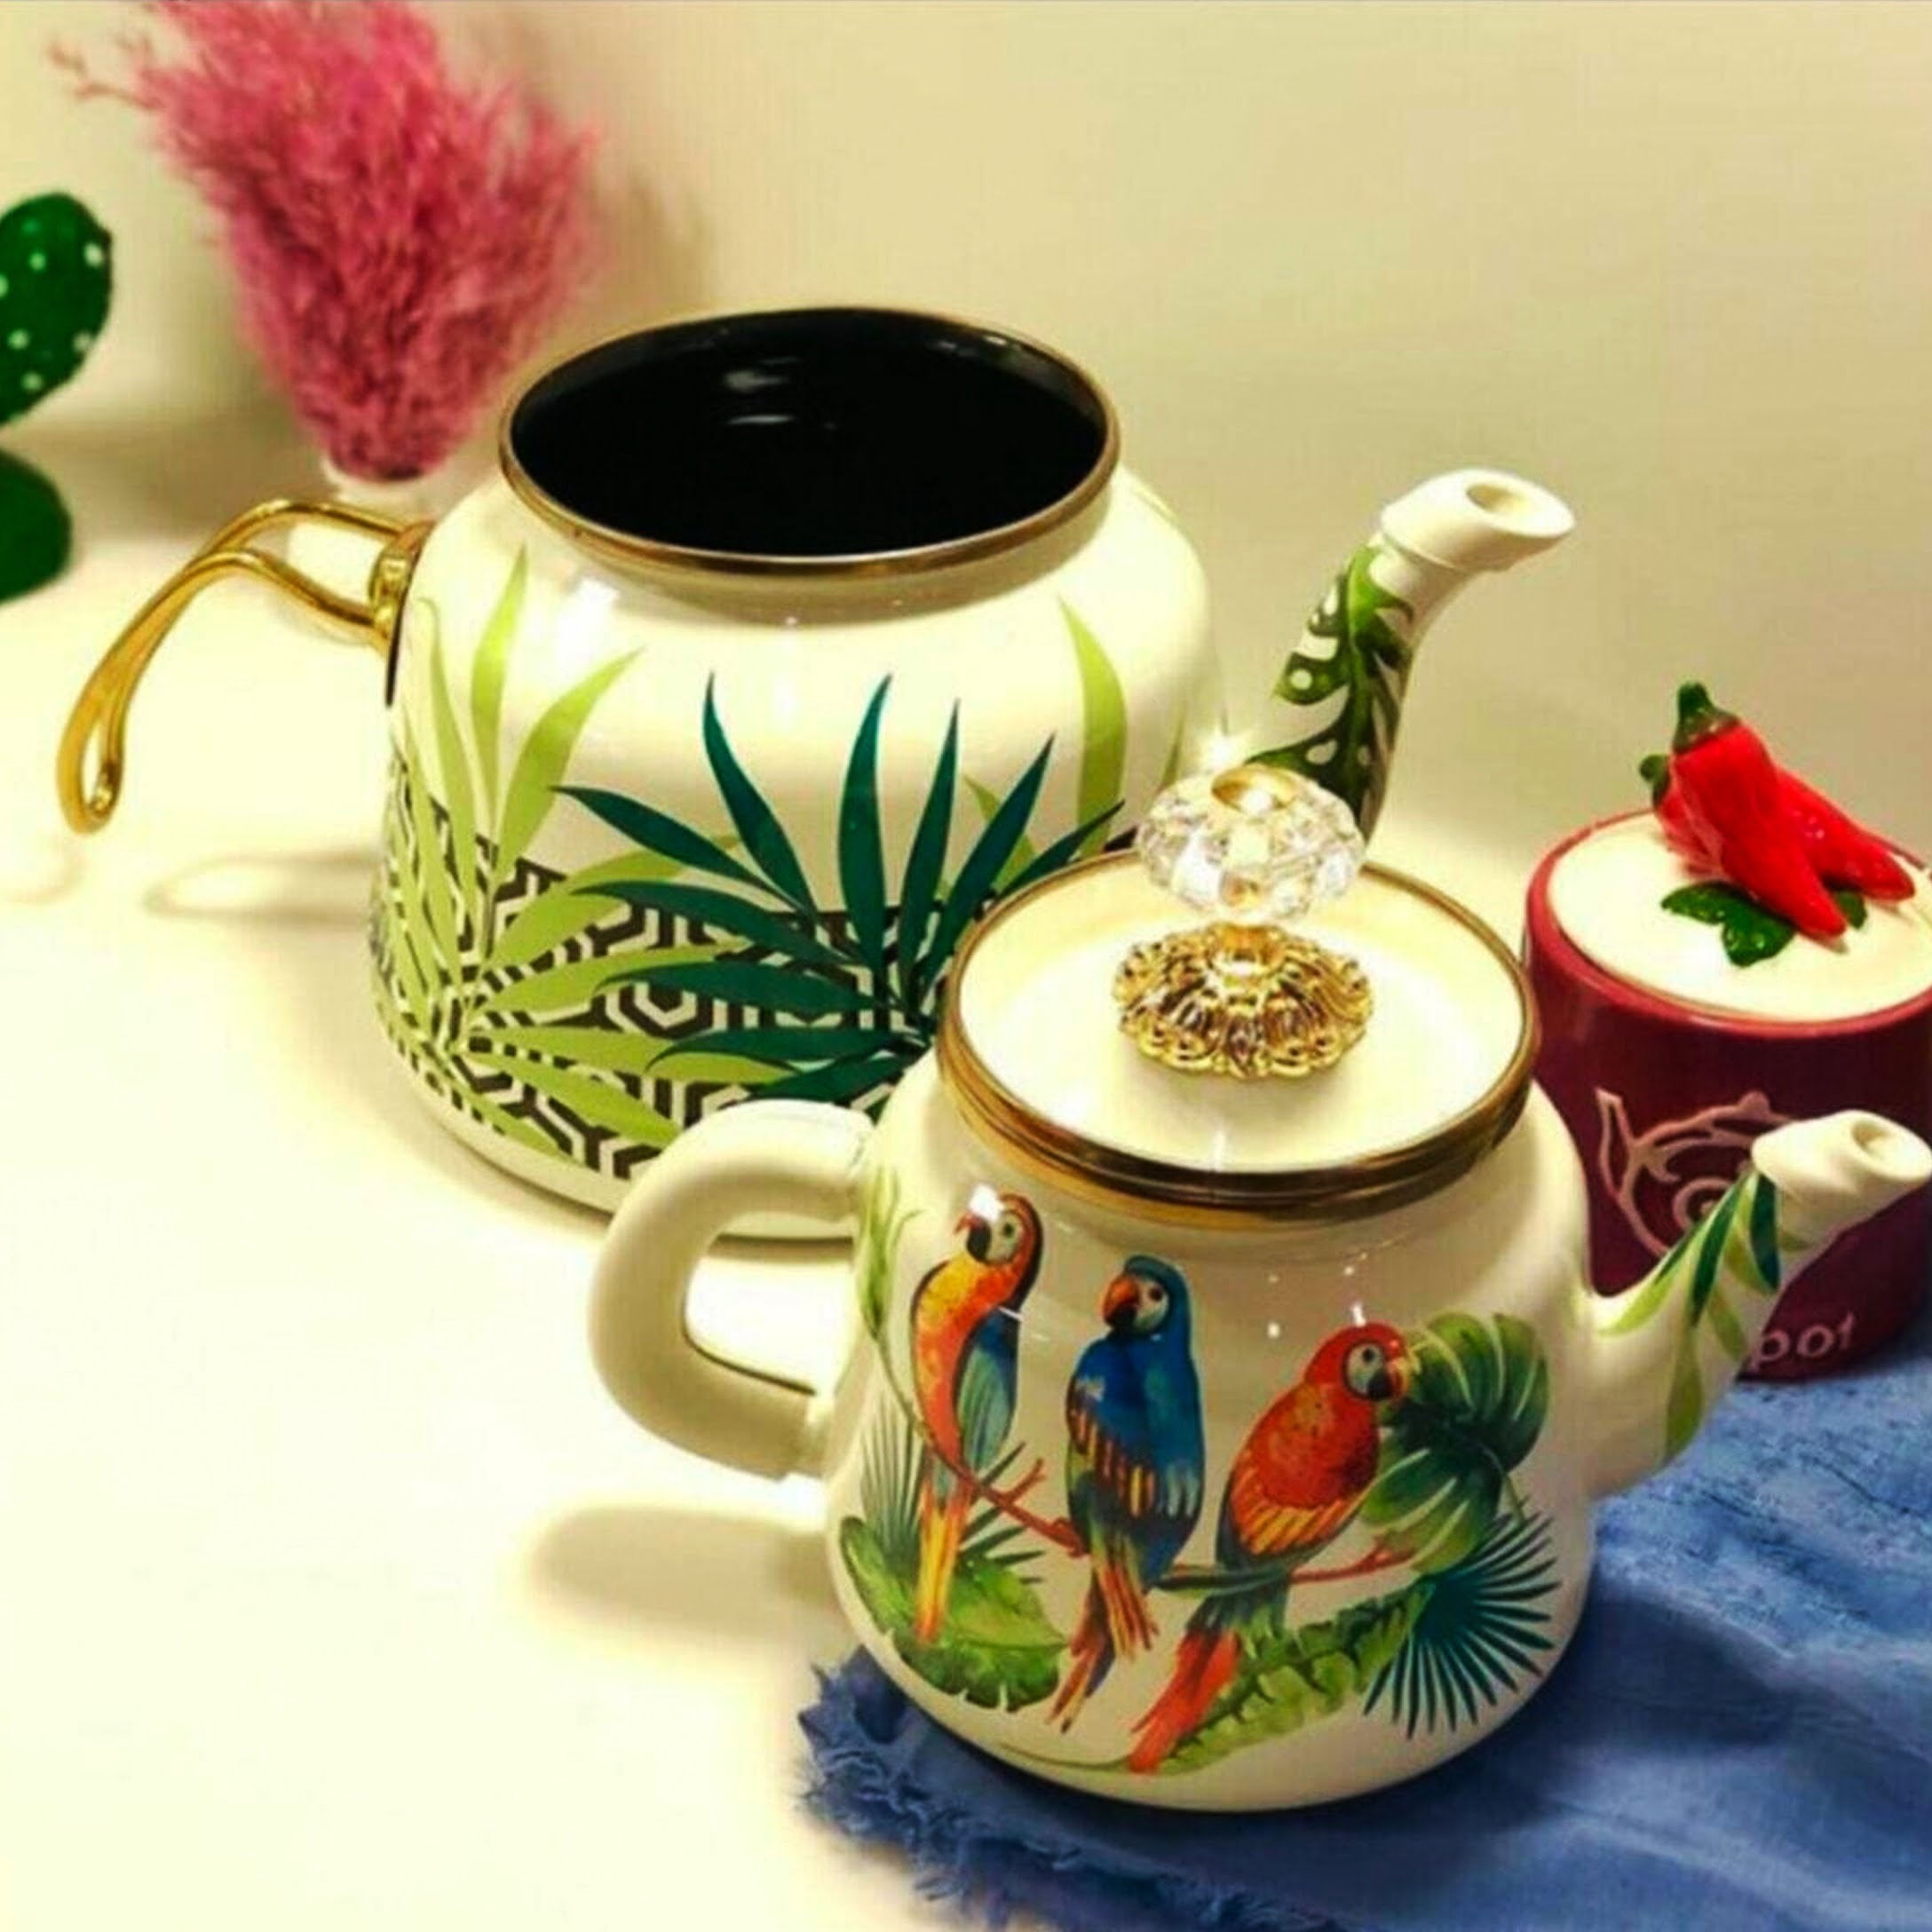 Turquoise Color Glory Enamel Turkish Tea Pot Kettle, Turkish Teapot, Tea  Kettle